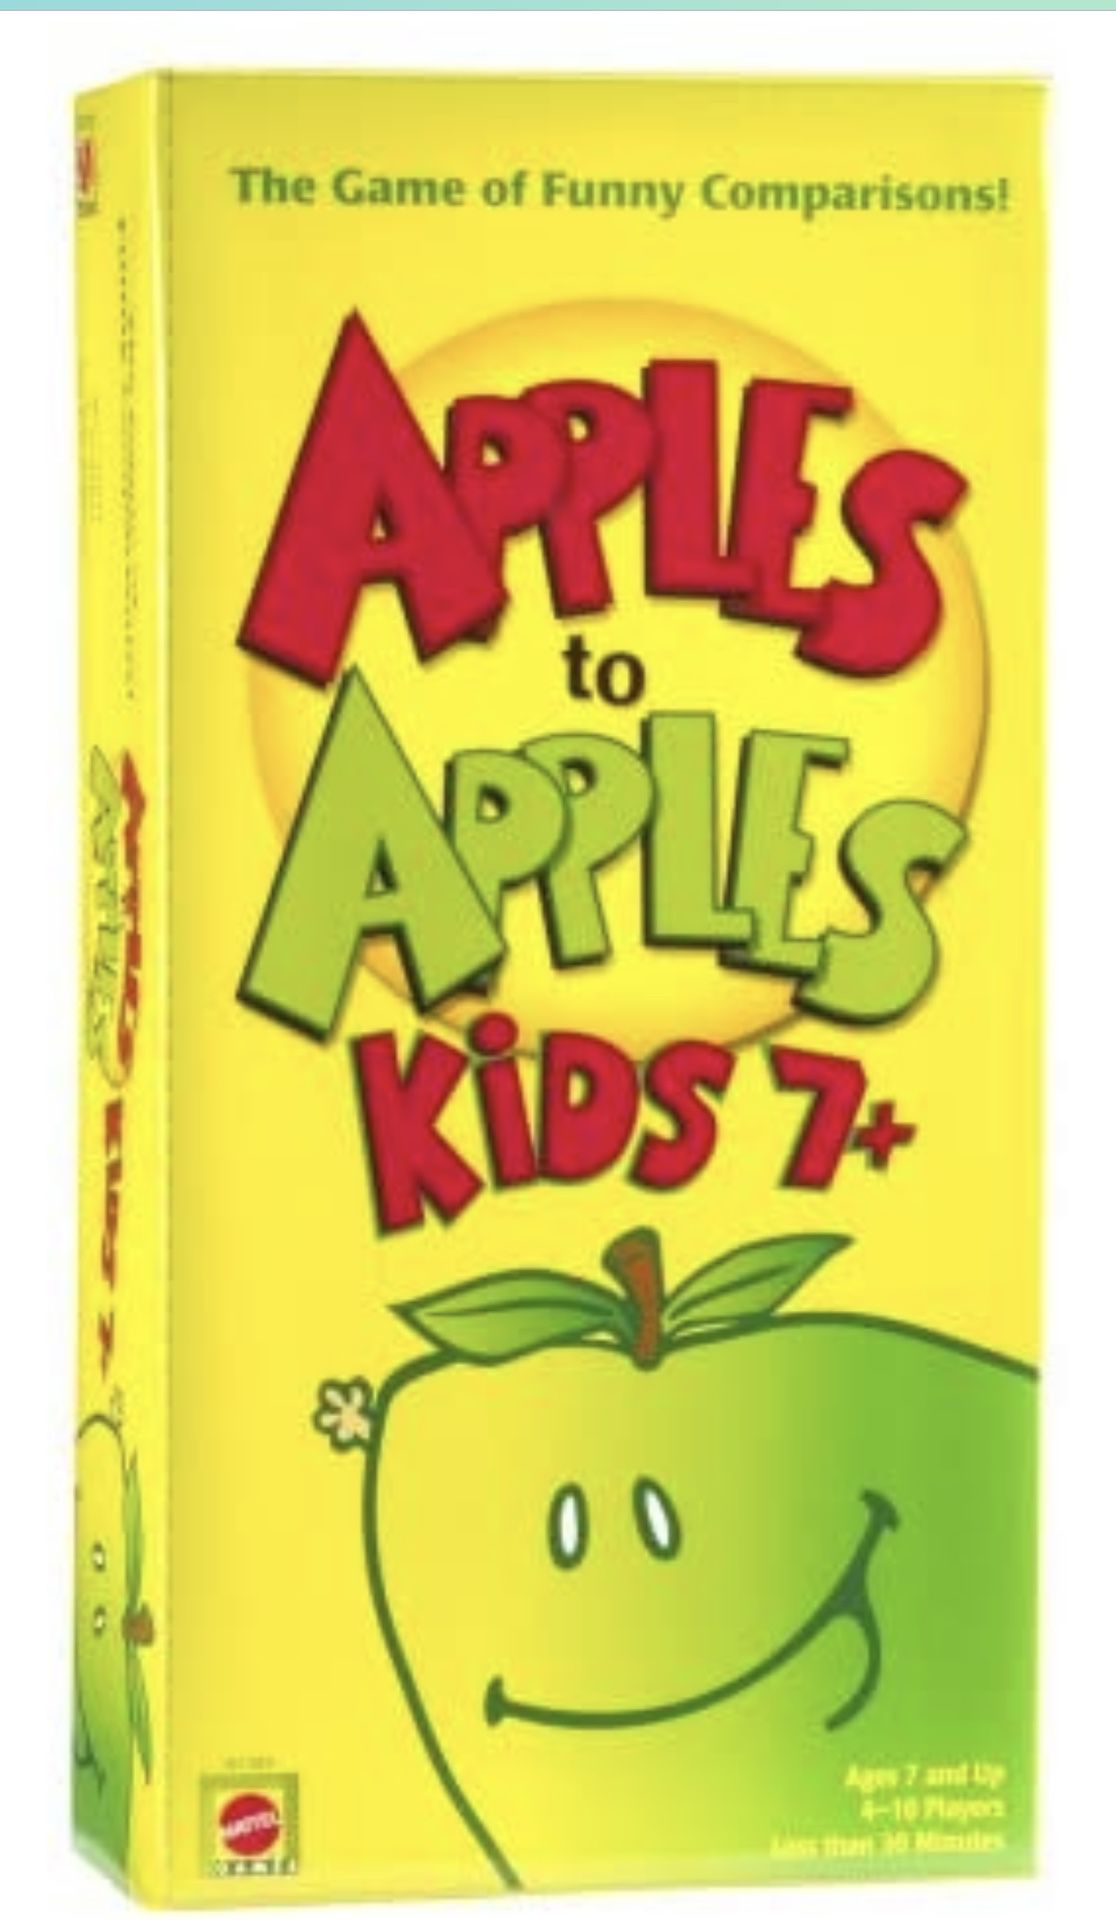 Apples To Apples Kids 7+